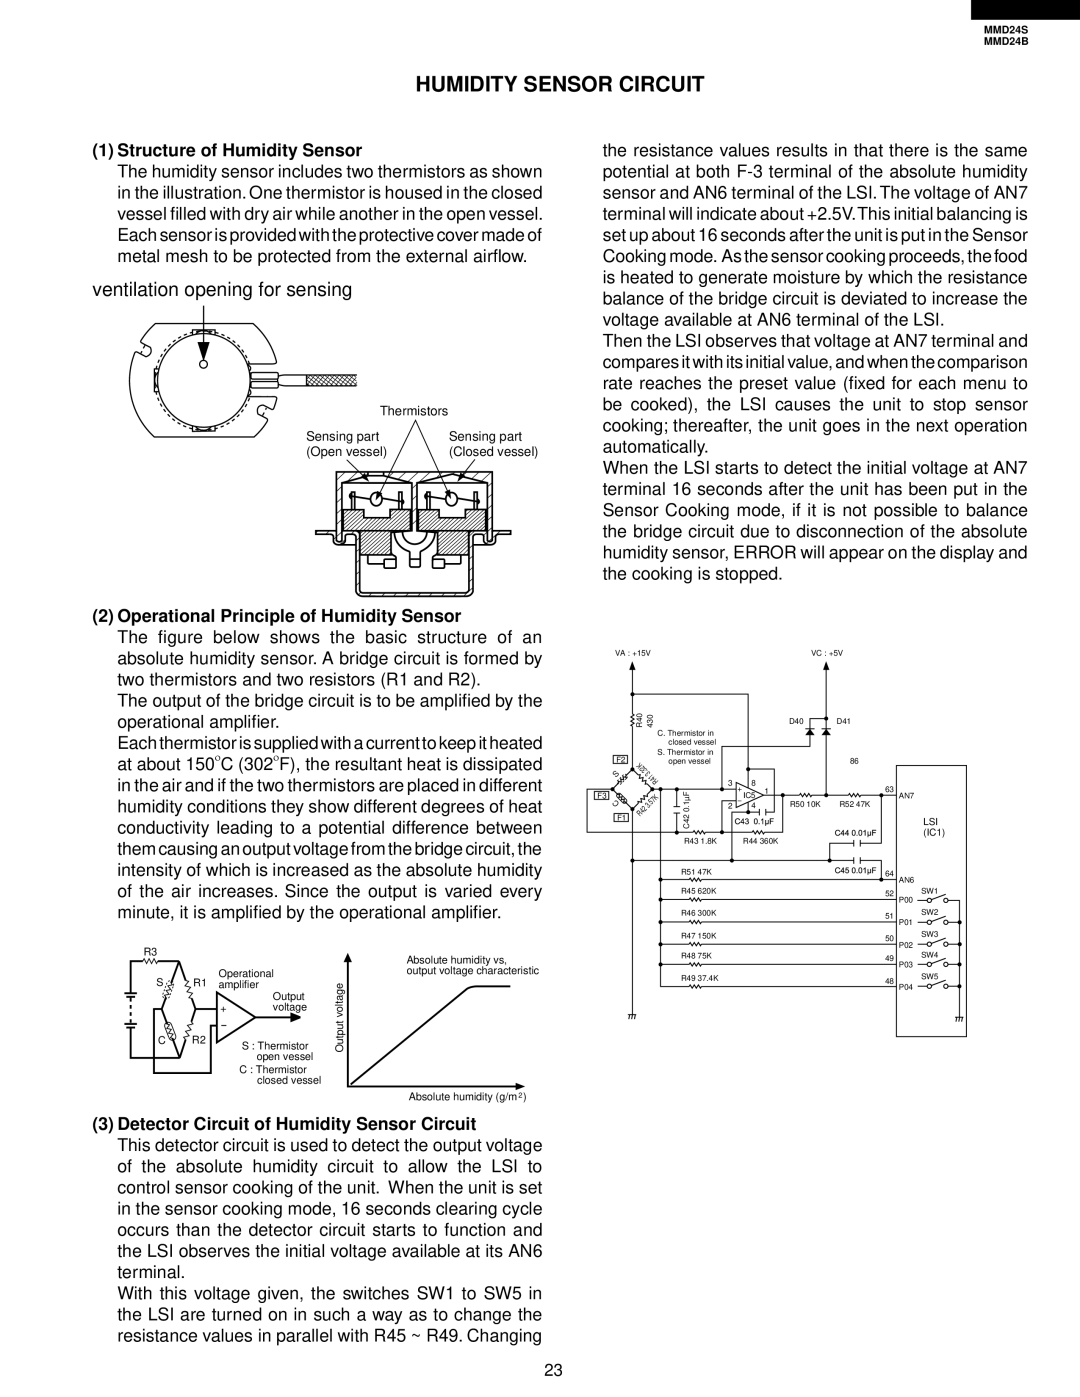 Sharp MMD24S, MMD24B manual Humidity Sensor Circuit, ventilation opening for sensing, Structure of Humidity Sensor 